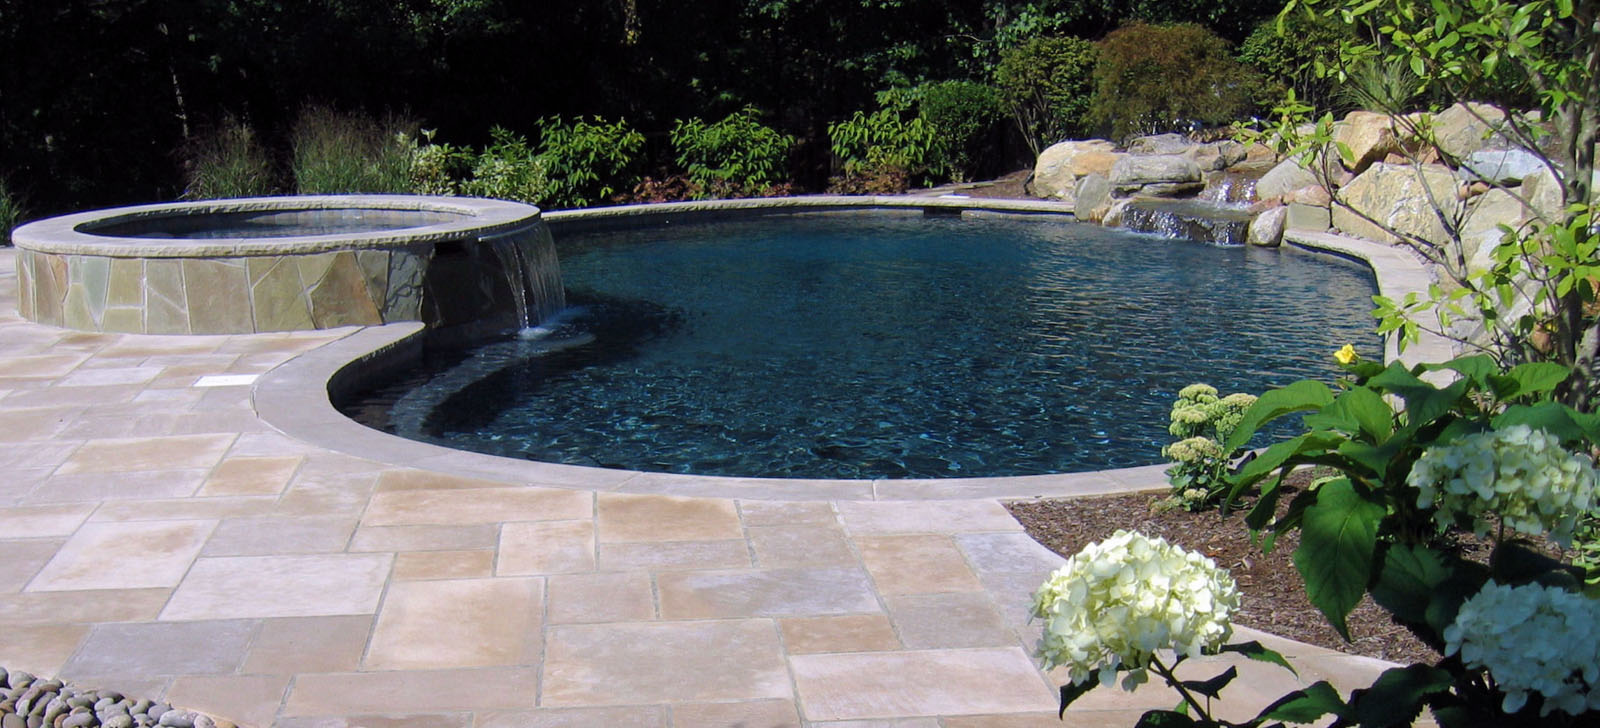 custom pool design with spa and pool waterfall